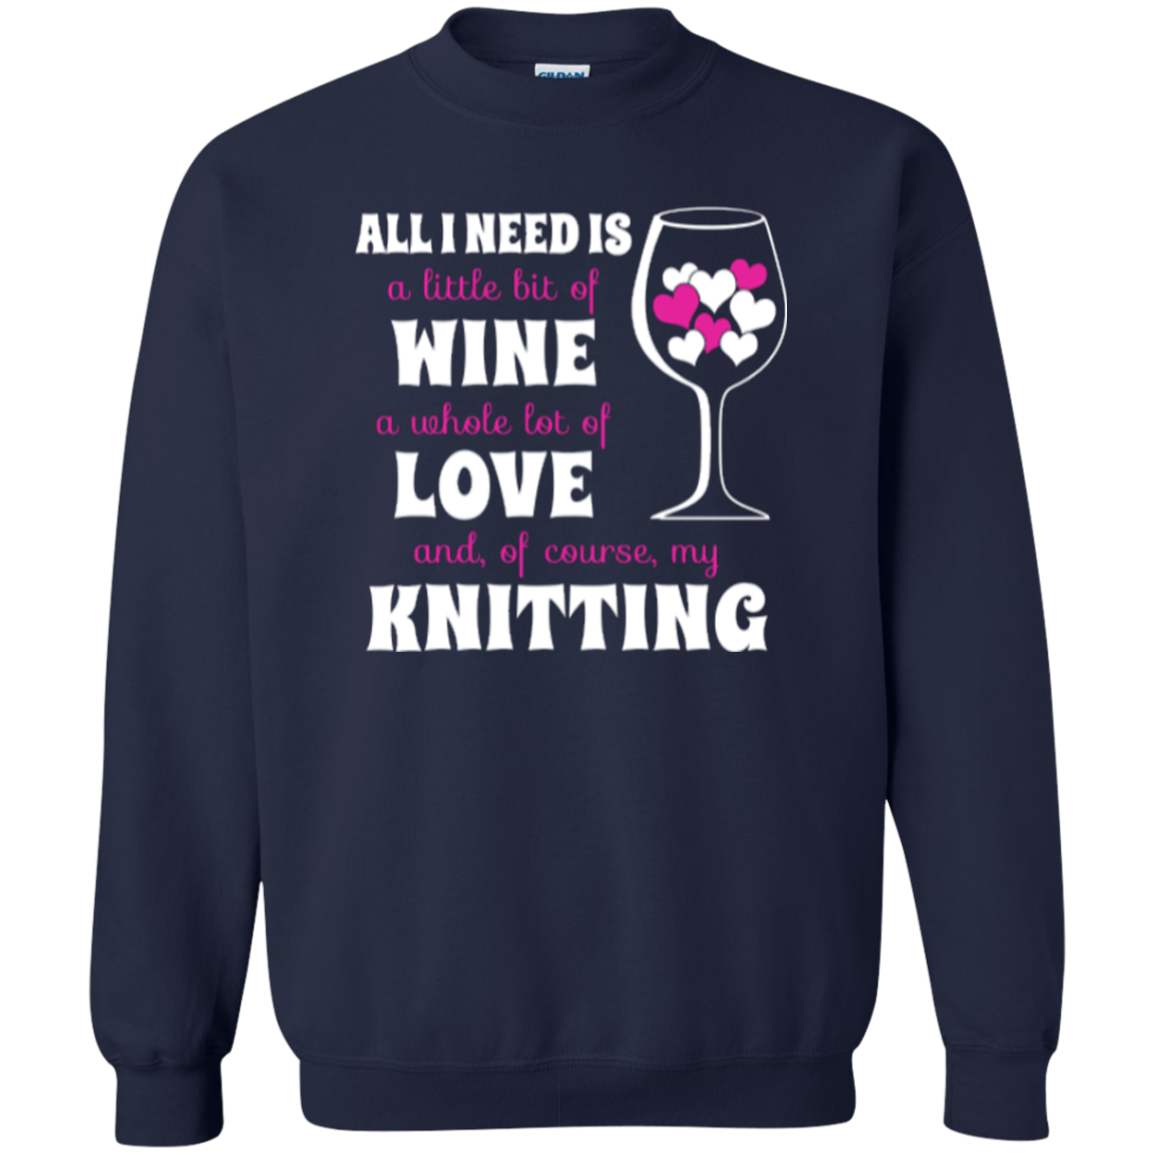 All I Need is Wine-Love-Knitting Crewneck Sweatshirt - Crafter4Life - 4